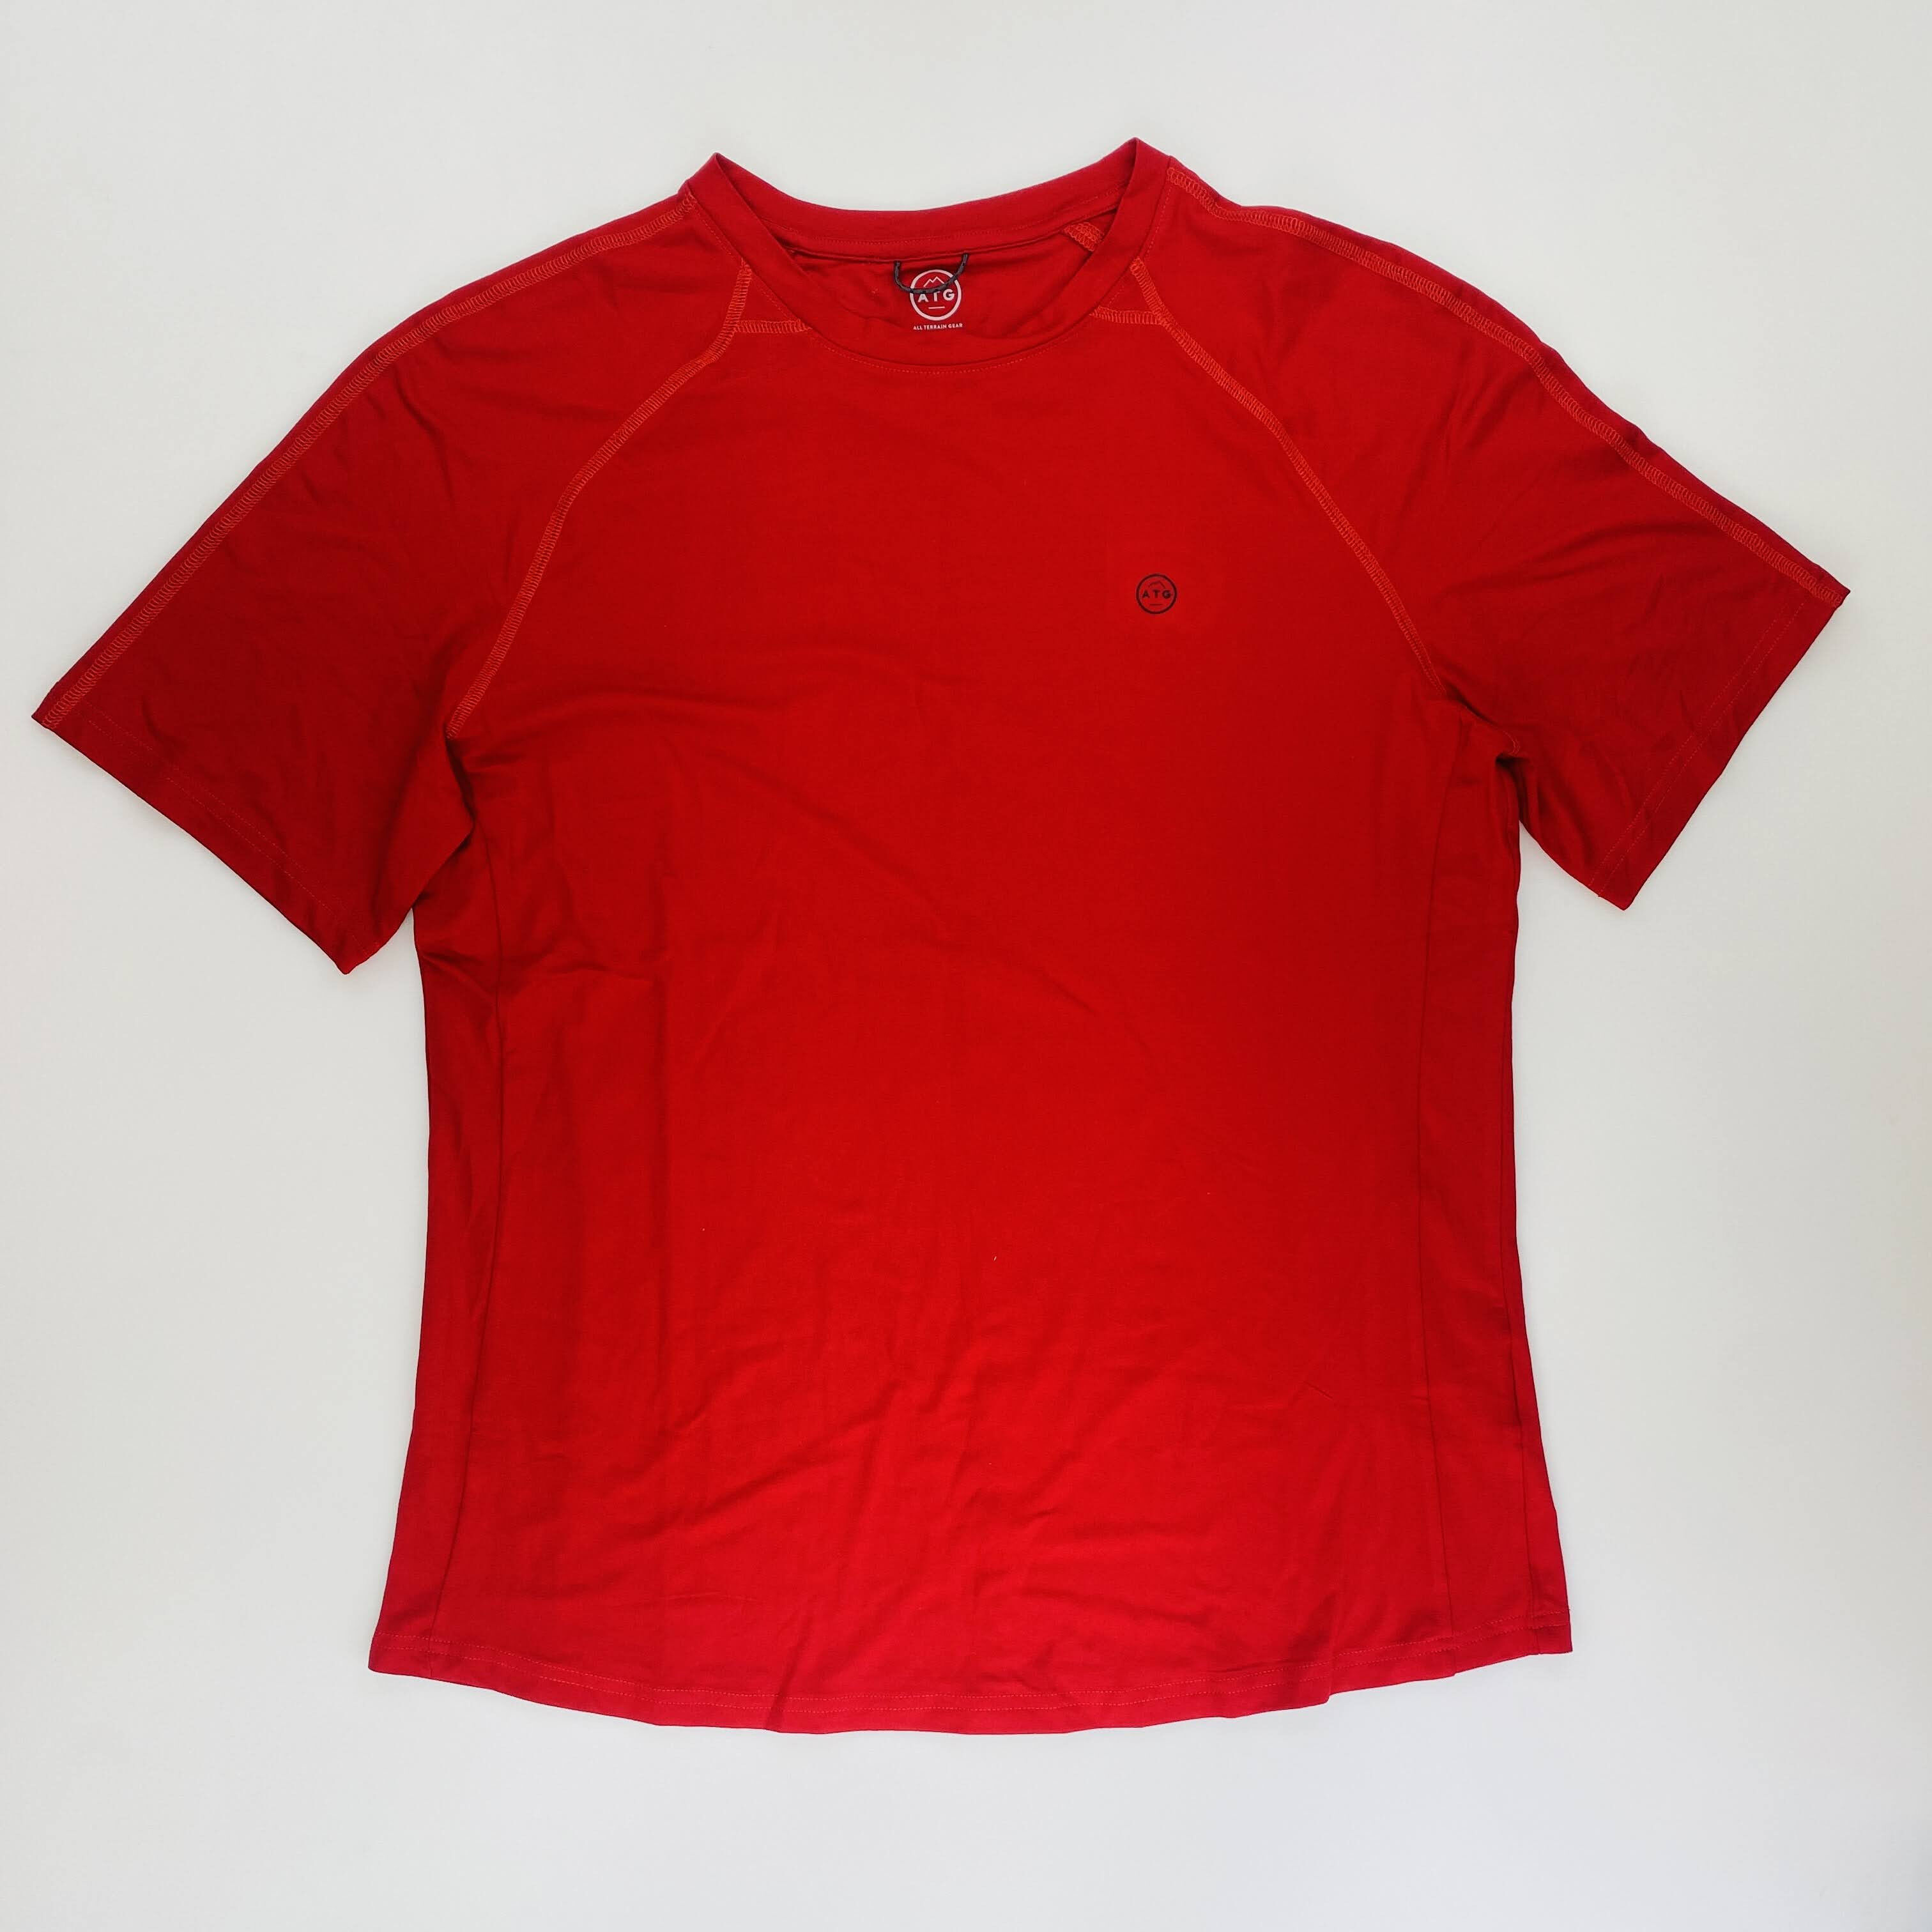 Wrangler Ss Performance T Shirt - Seconde main T-shirt homme - Rouge - L | Hardloop